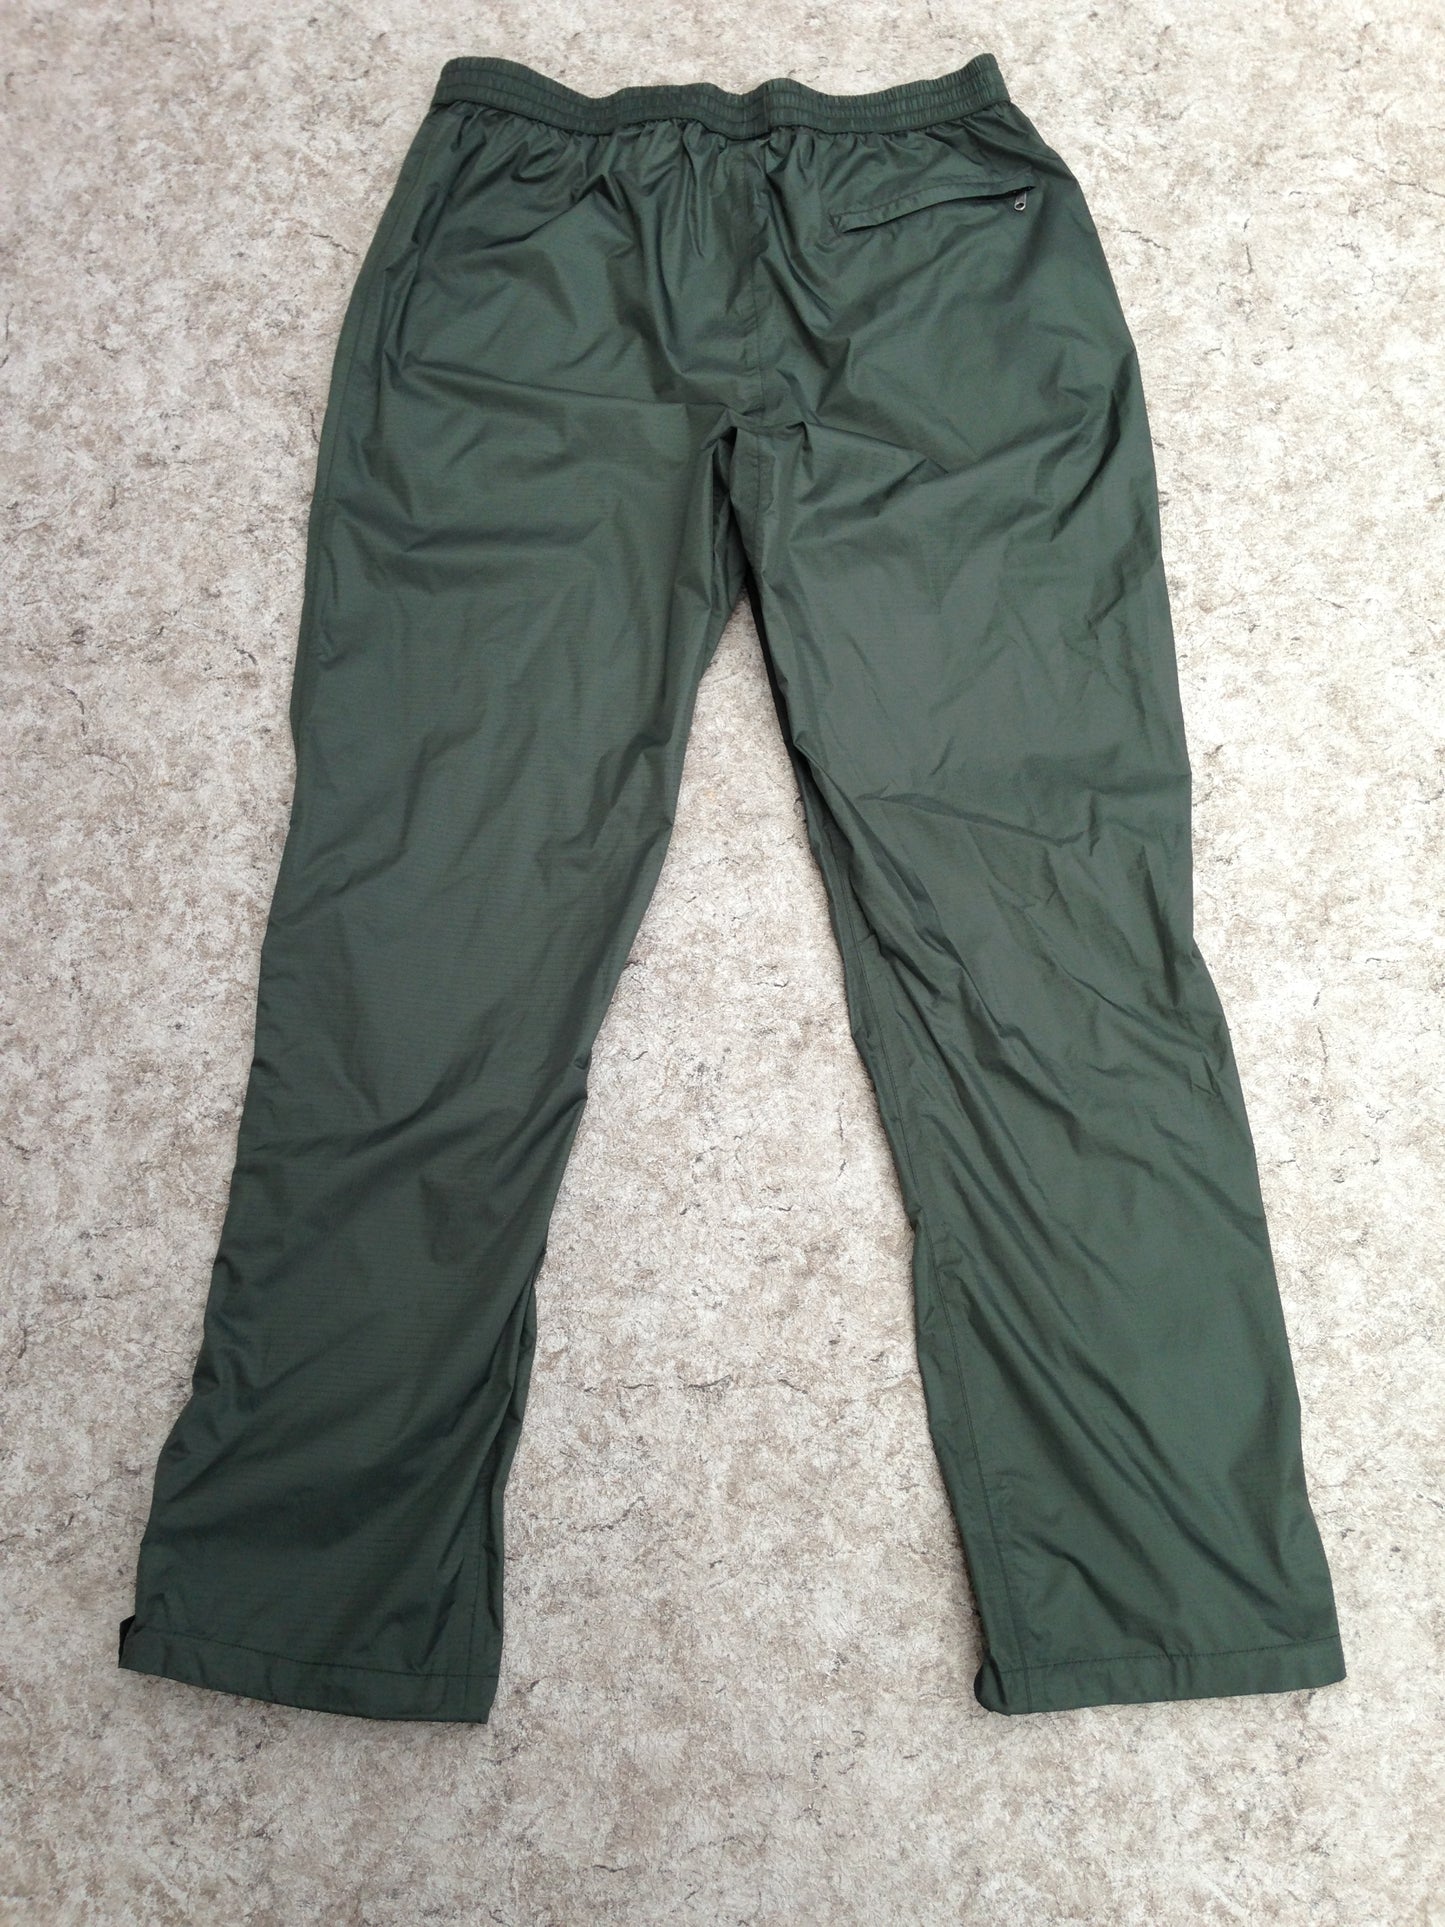 Rain Pants Men's Size X Large Marmot Bike Run Walk Waterproof Side Zippers Leg Hunter Green Excellent